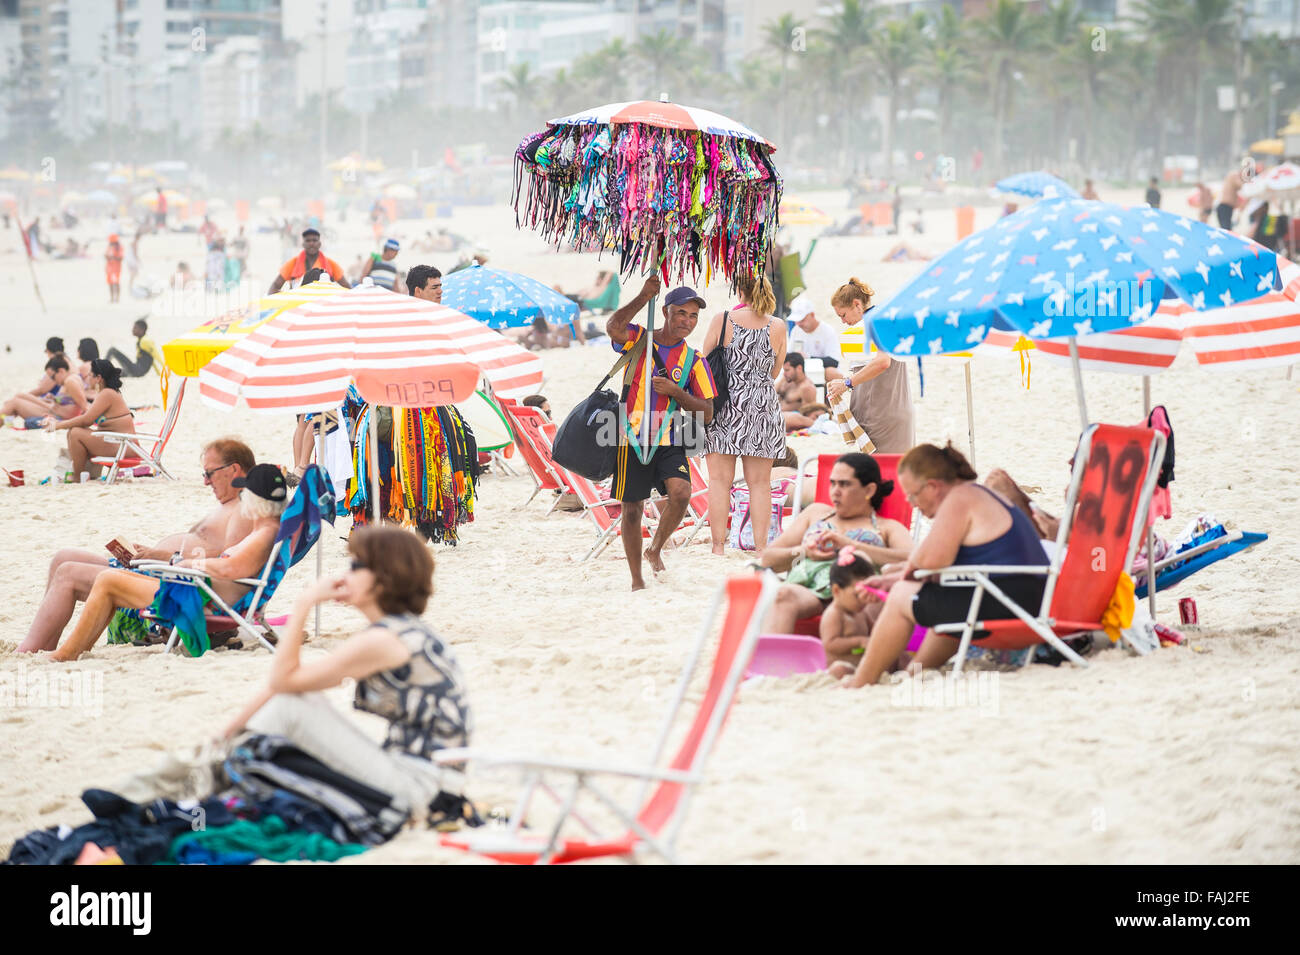 RIO DE JANEIRO, BRAZIL - OCTOBER 27, 2015: Beach vendor selling bikinis walks with his merchandise hanging from a beach umbrella Stock Photo